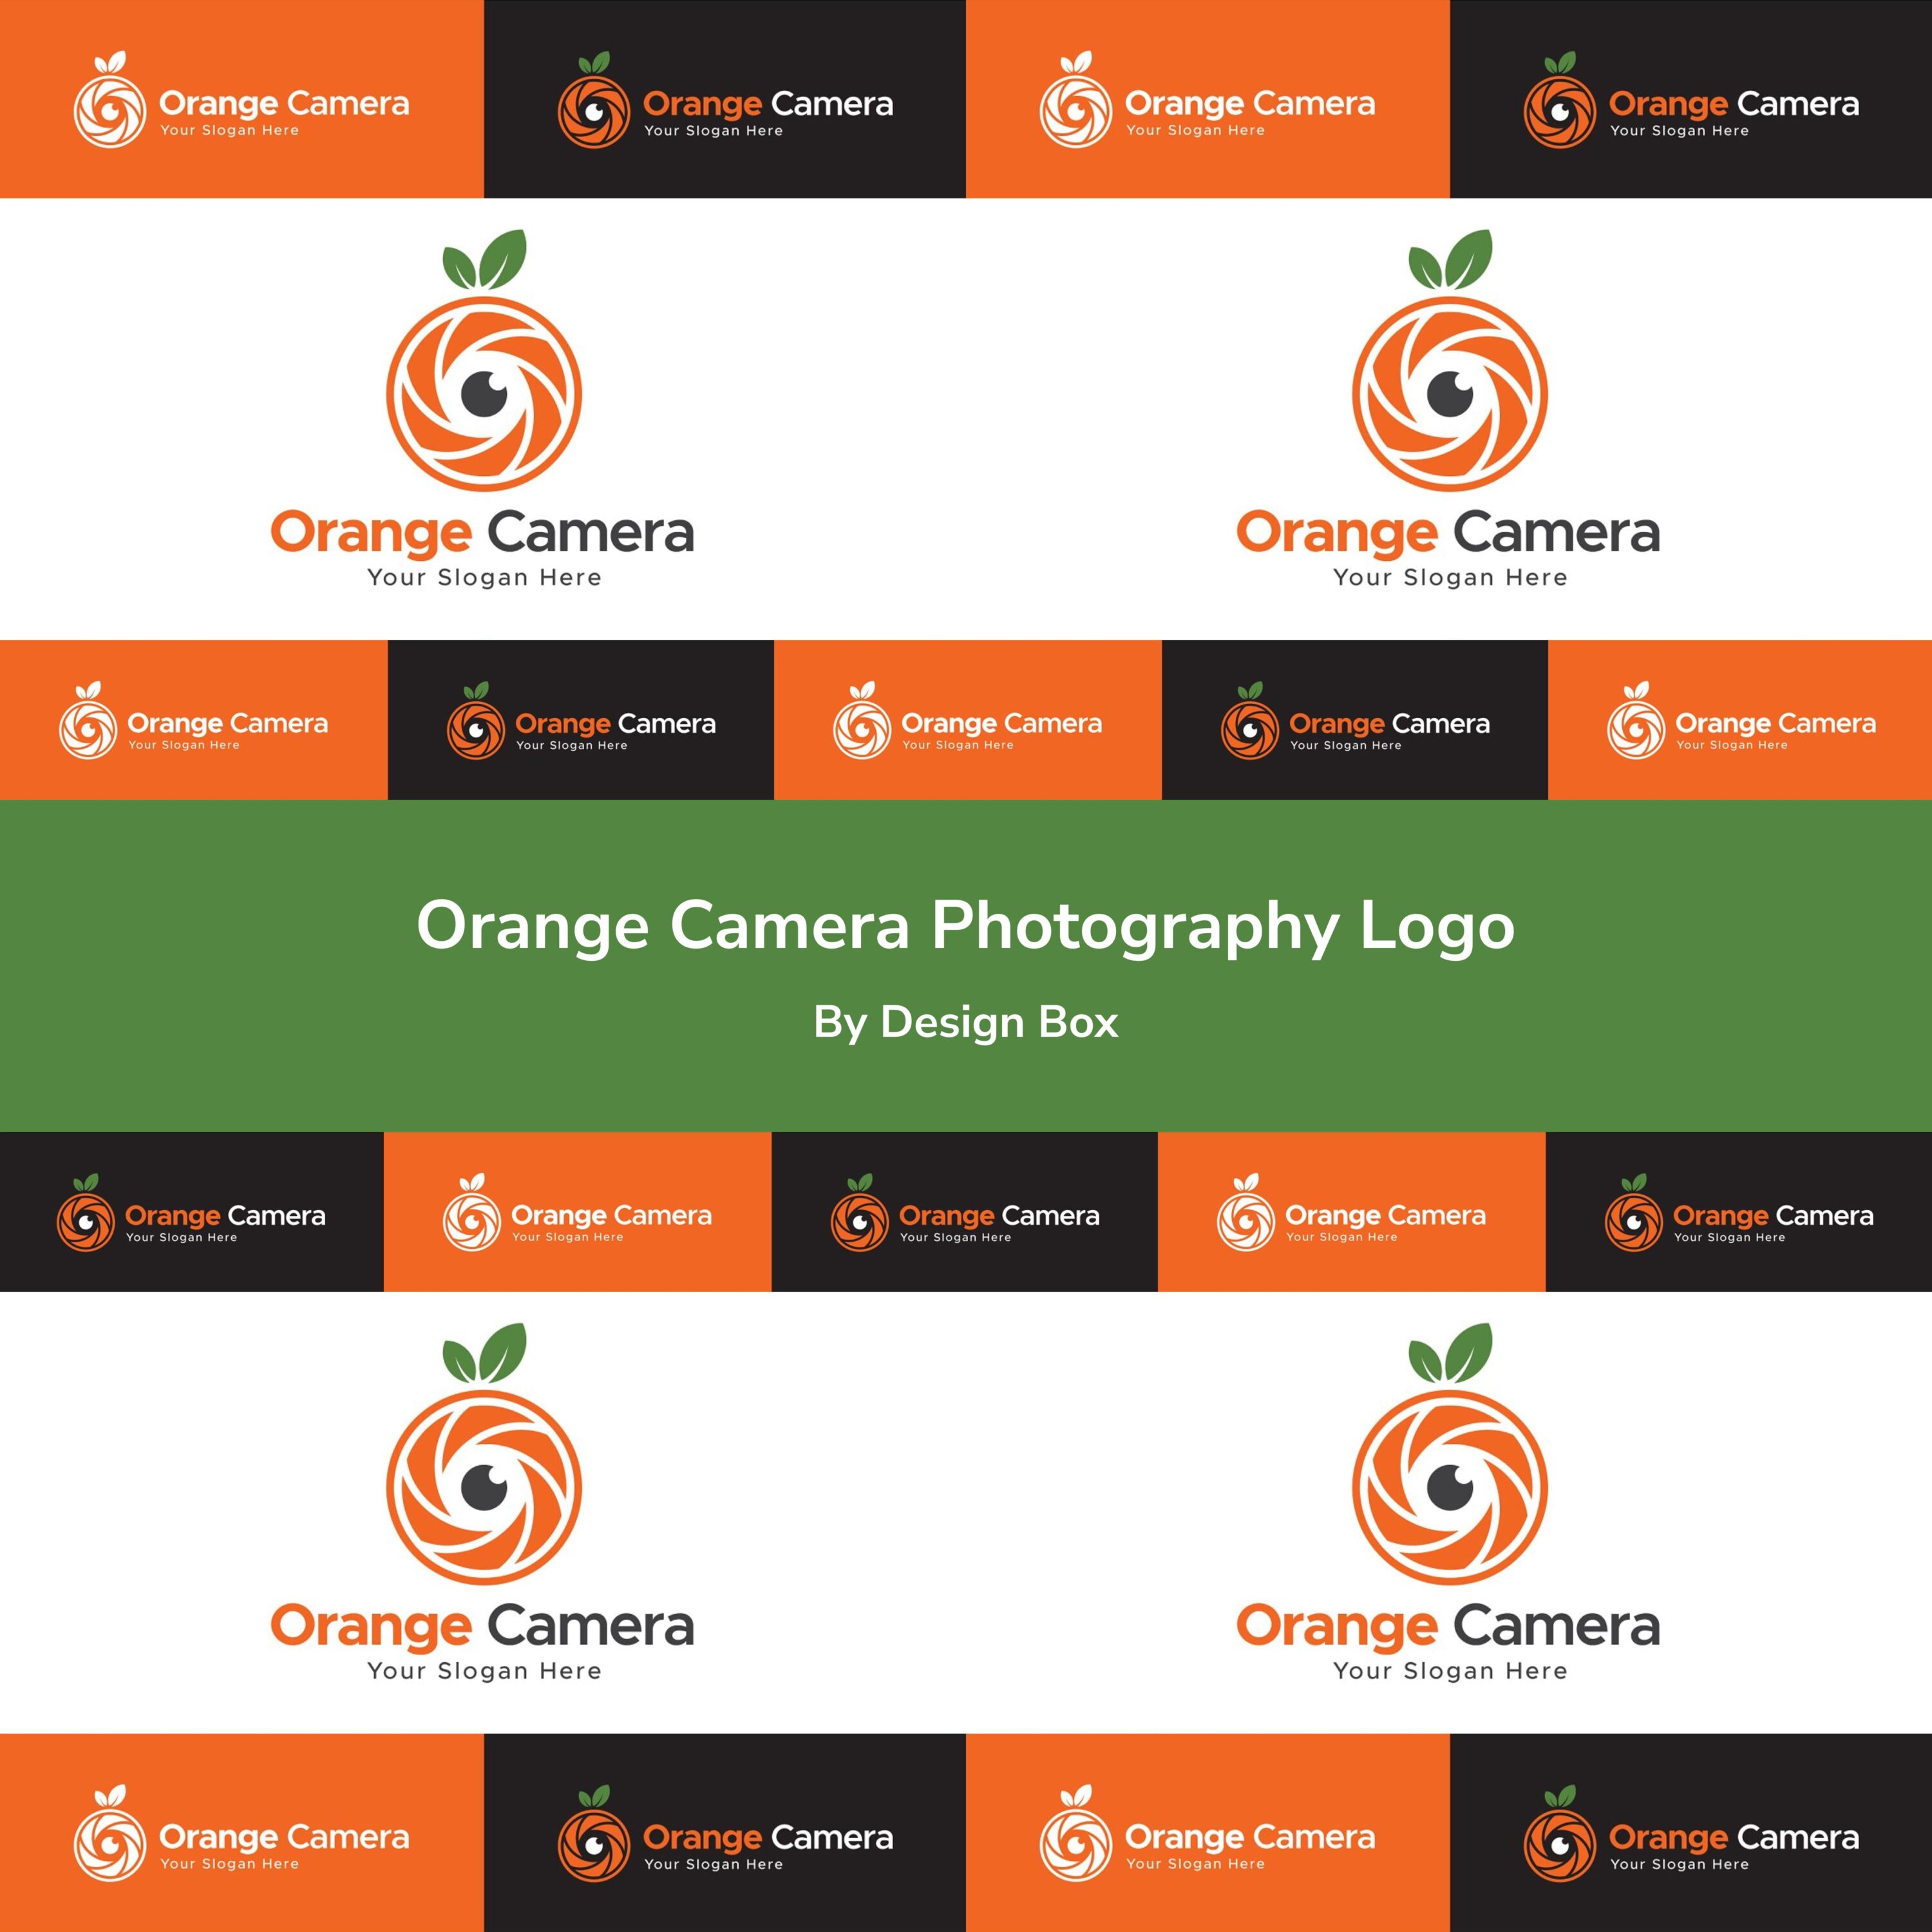 Orange Camera Photography Logo cover.